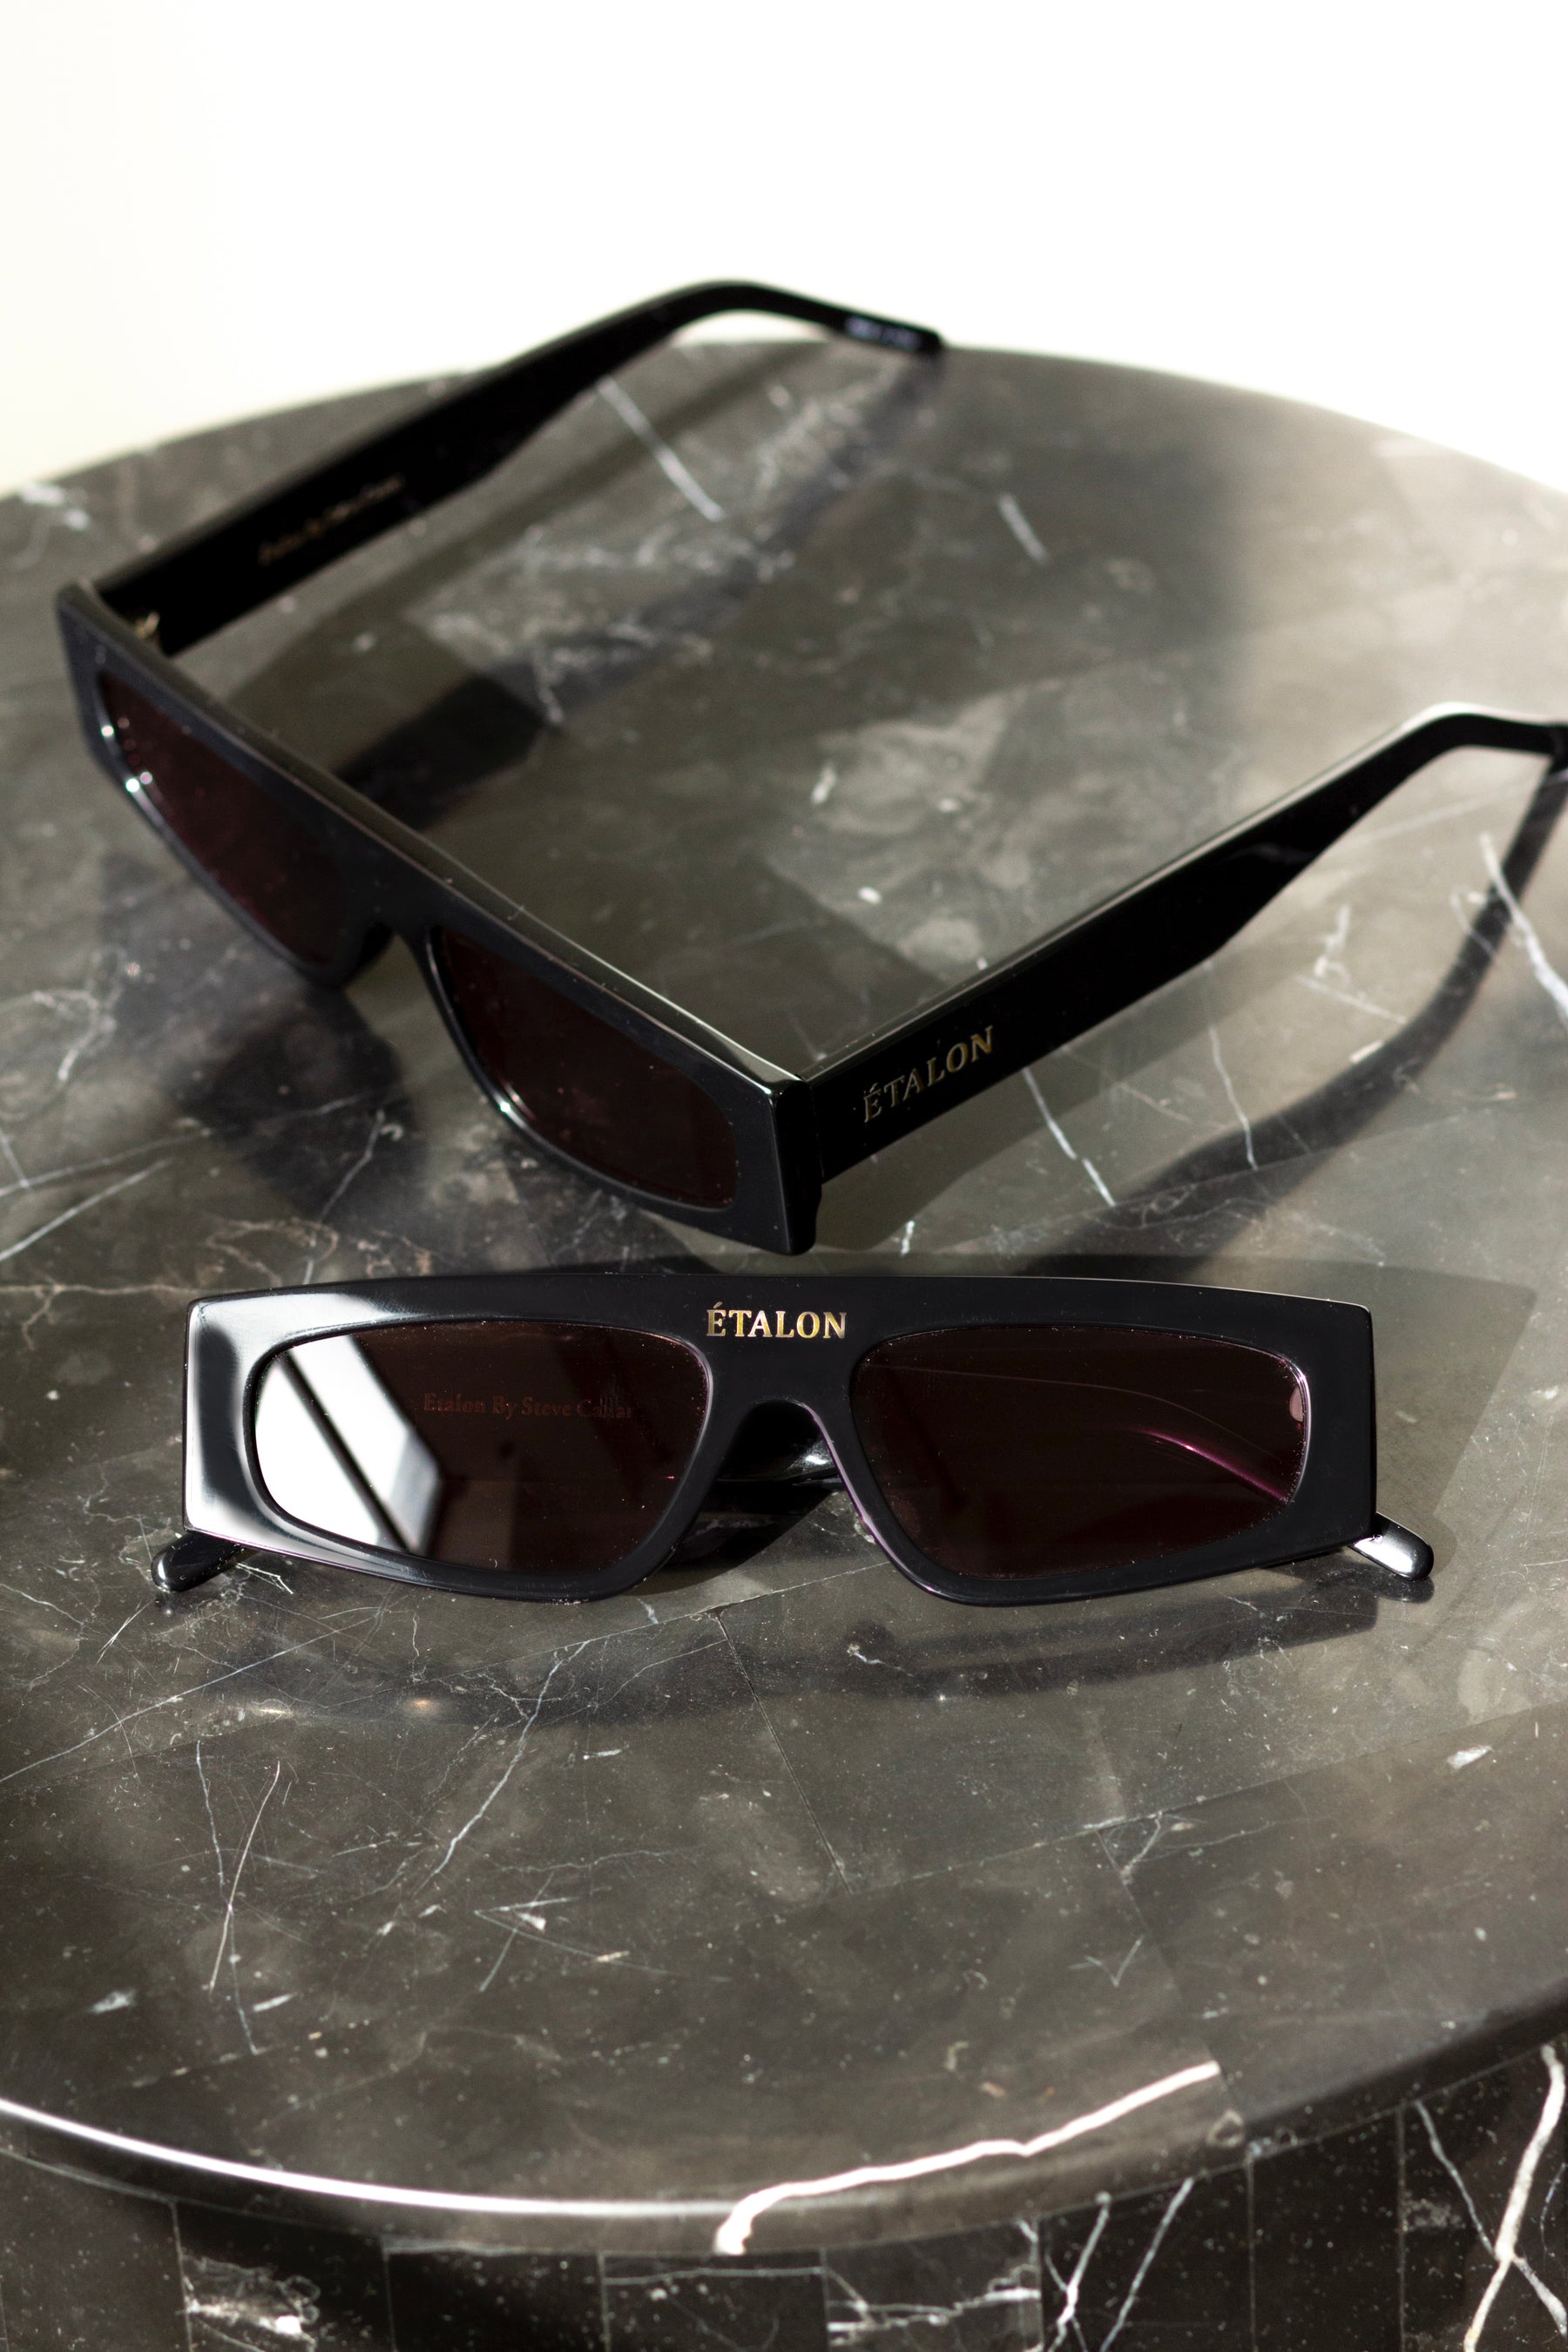 Black Diamond Sunglasses